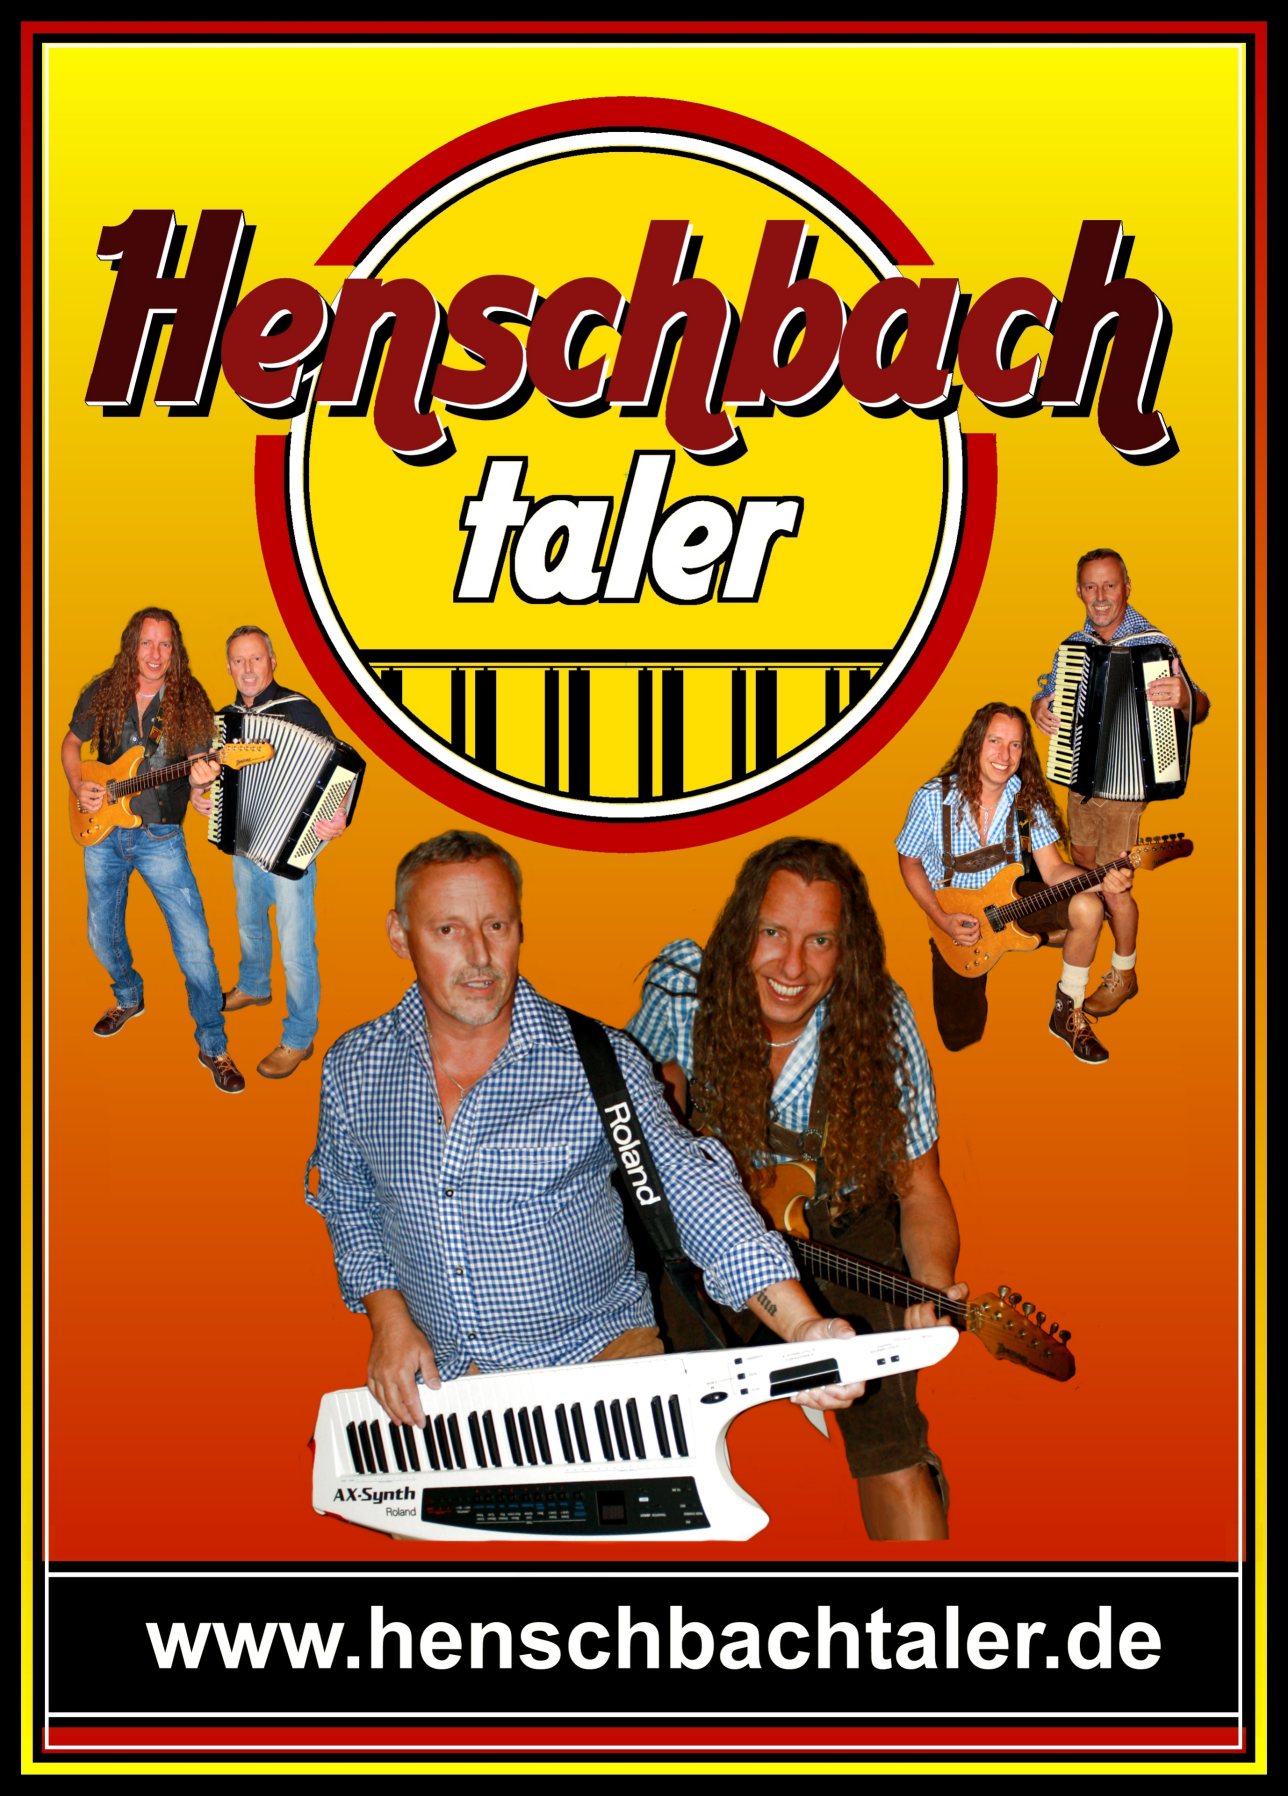 Henschbachtaler